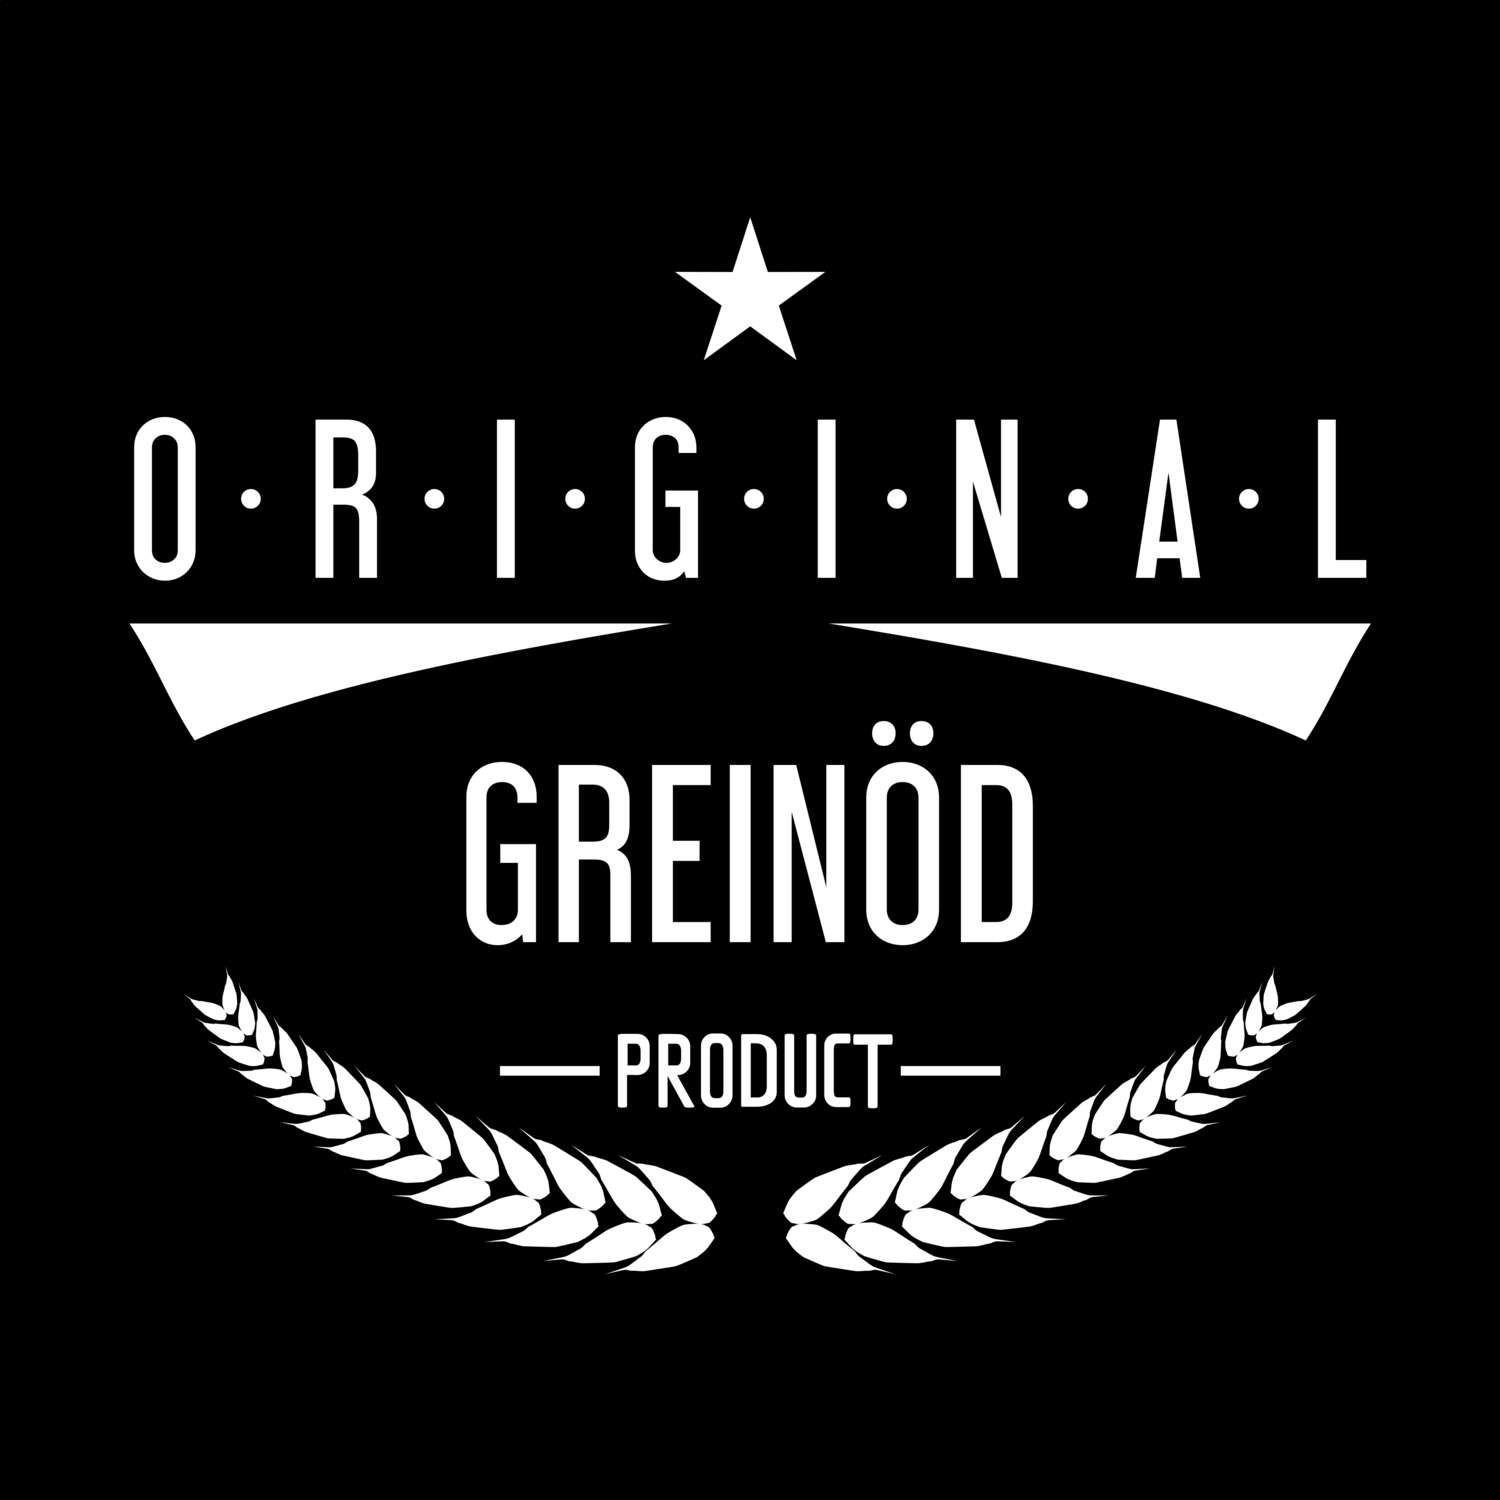 Greinöd T-Shirt »Original Product«